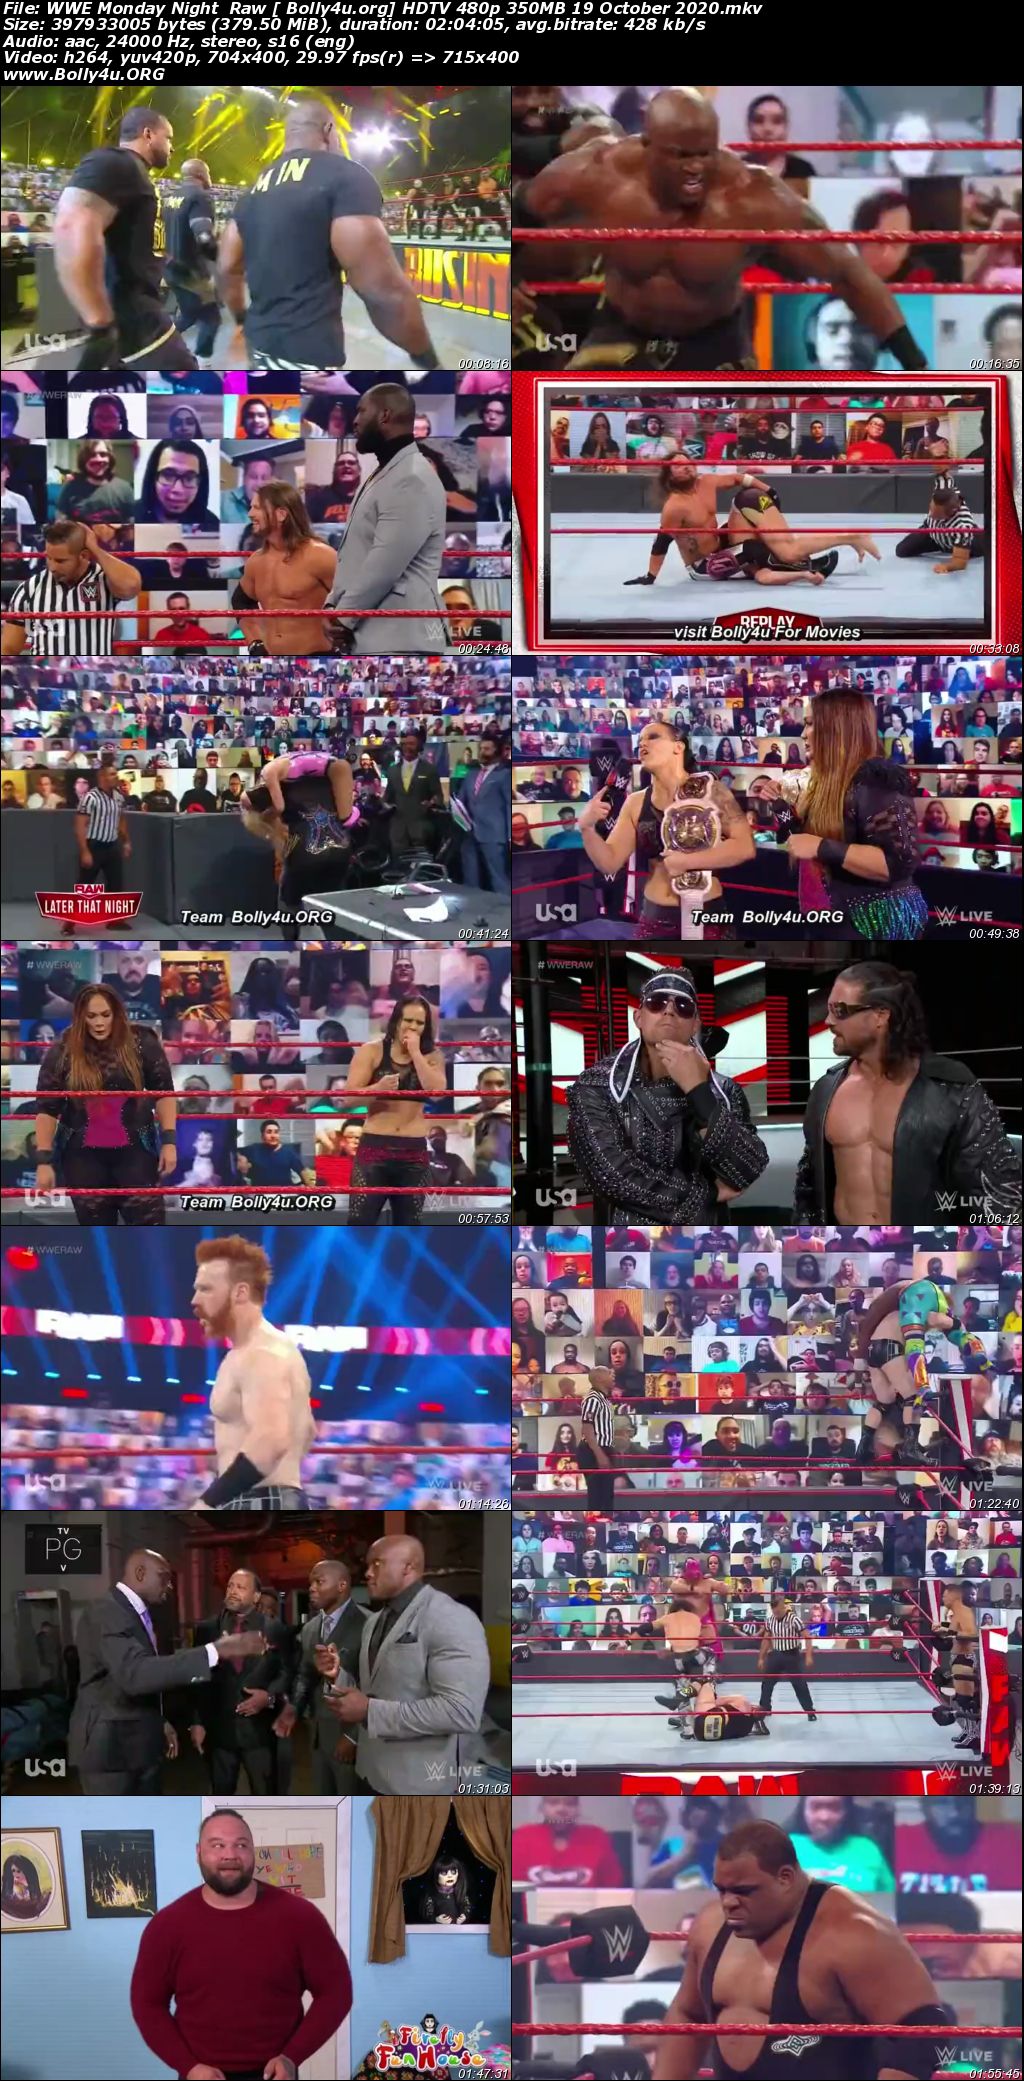 WWE Monday Night Raw HDTV 480p 350MB 19 October 2020 Download